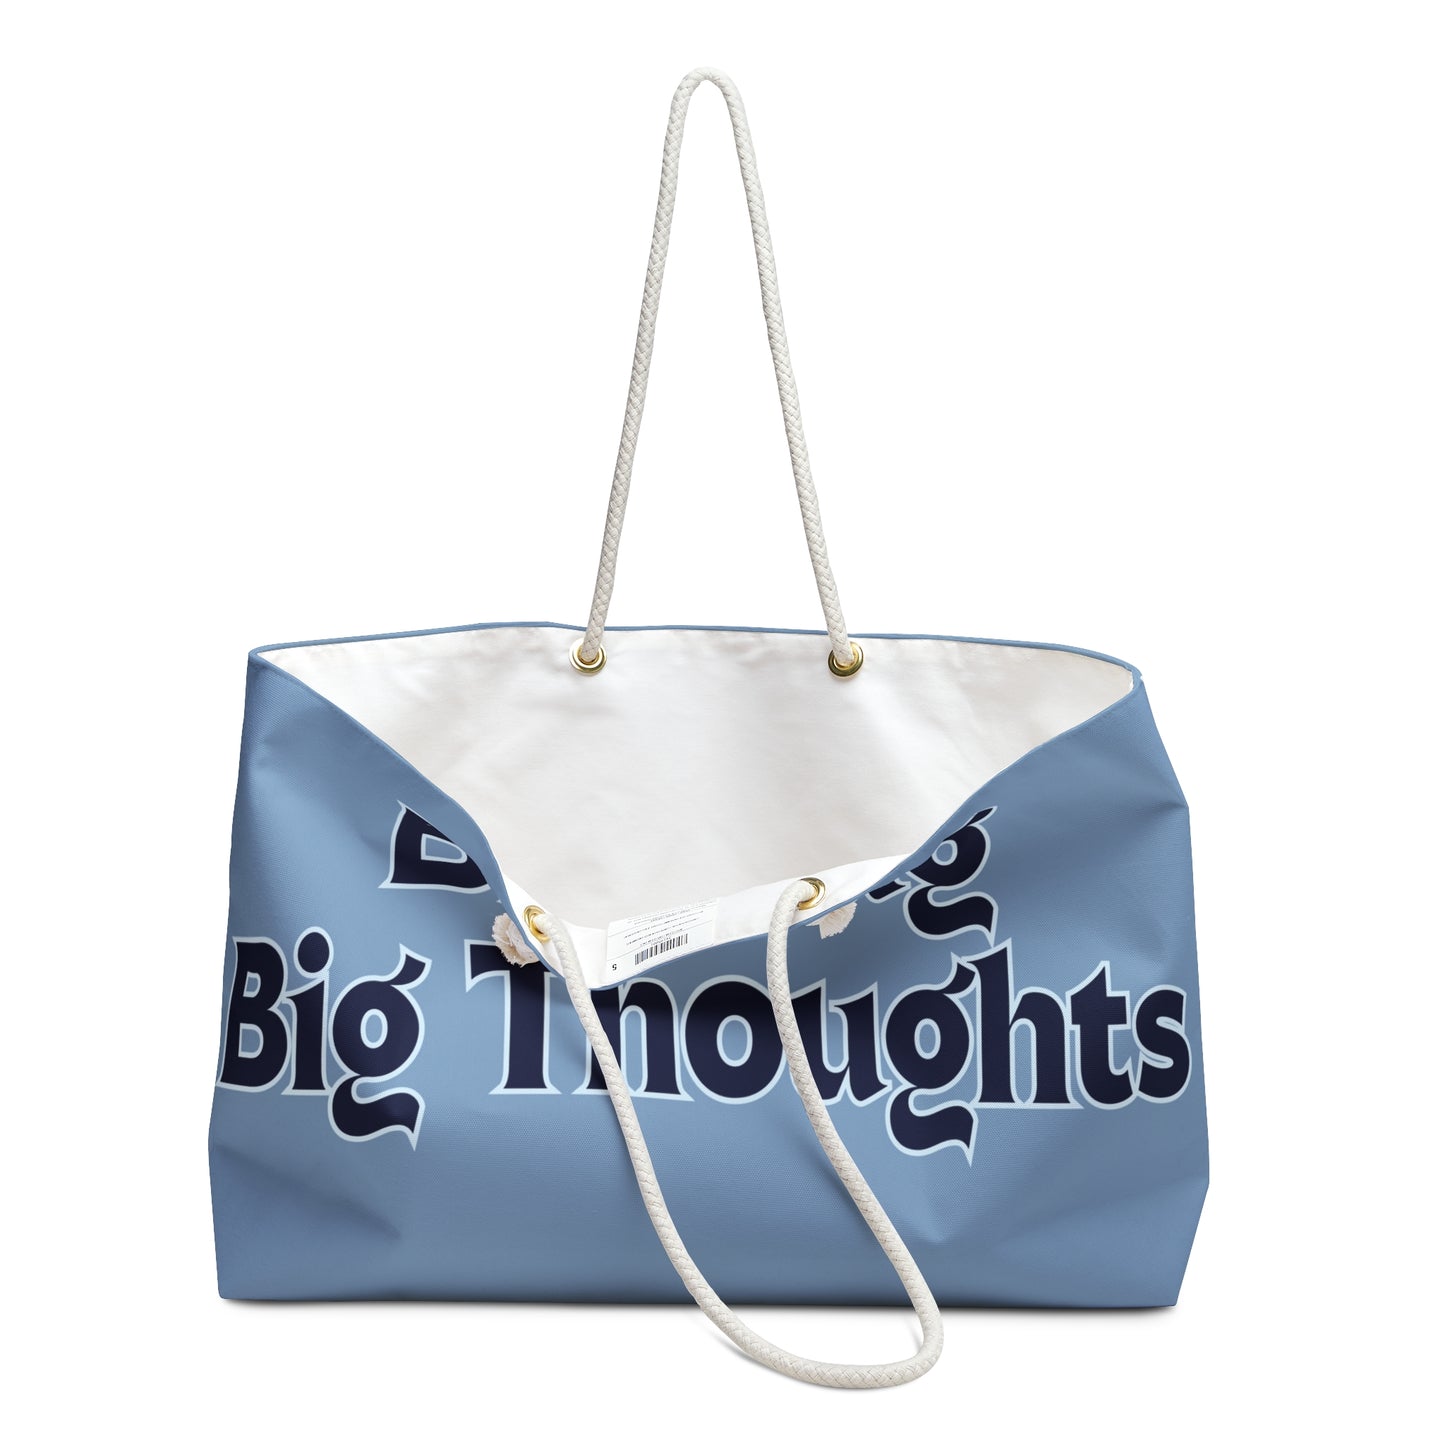 Artemis & Athena "Big Bag, Big Thoughts" Weekender Bag in Varsity Blue